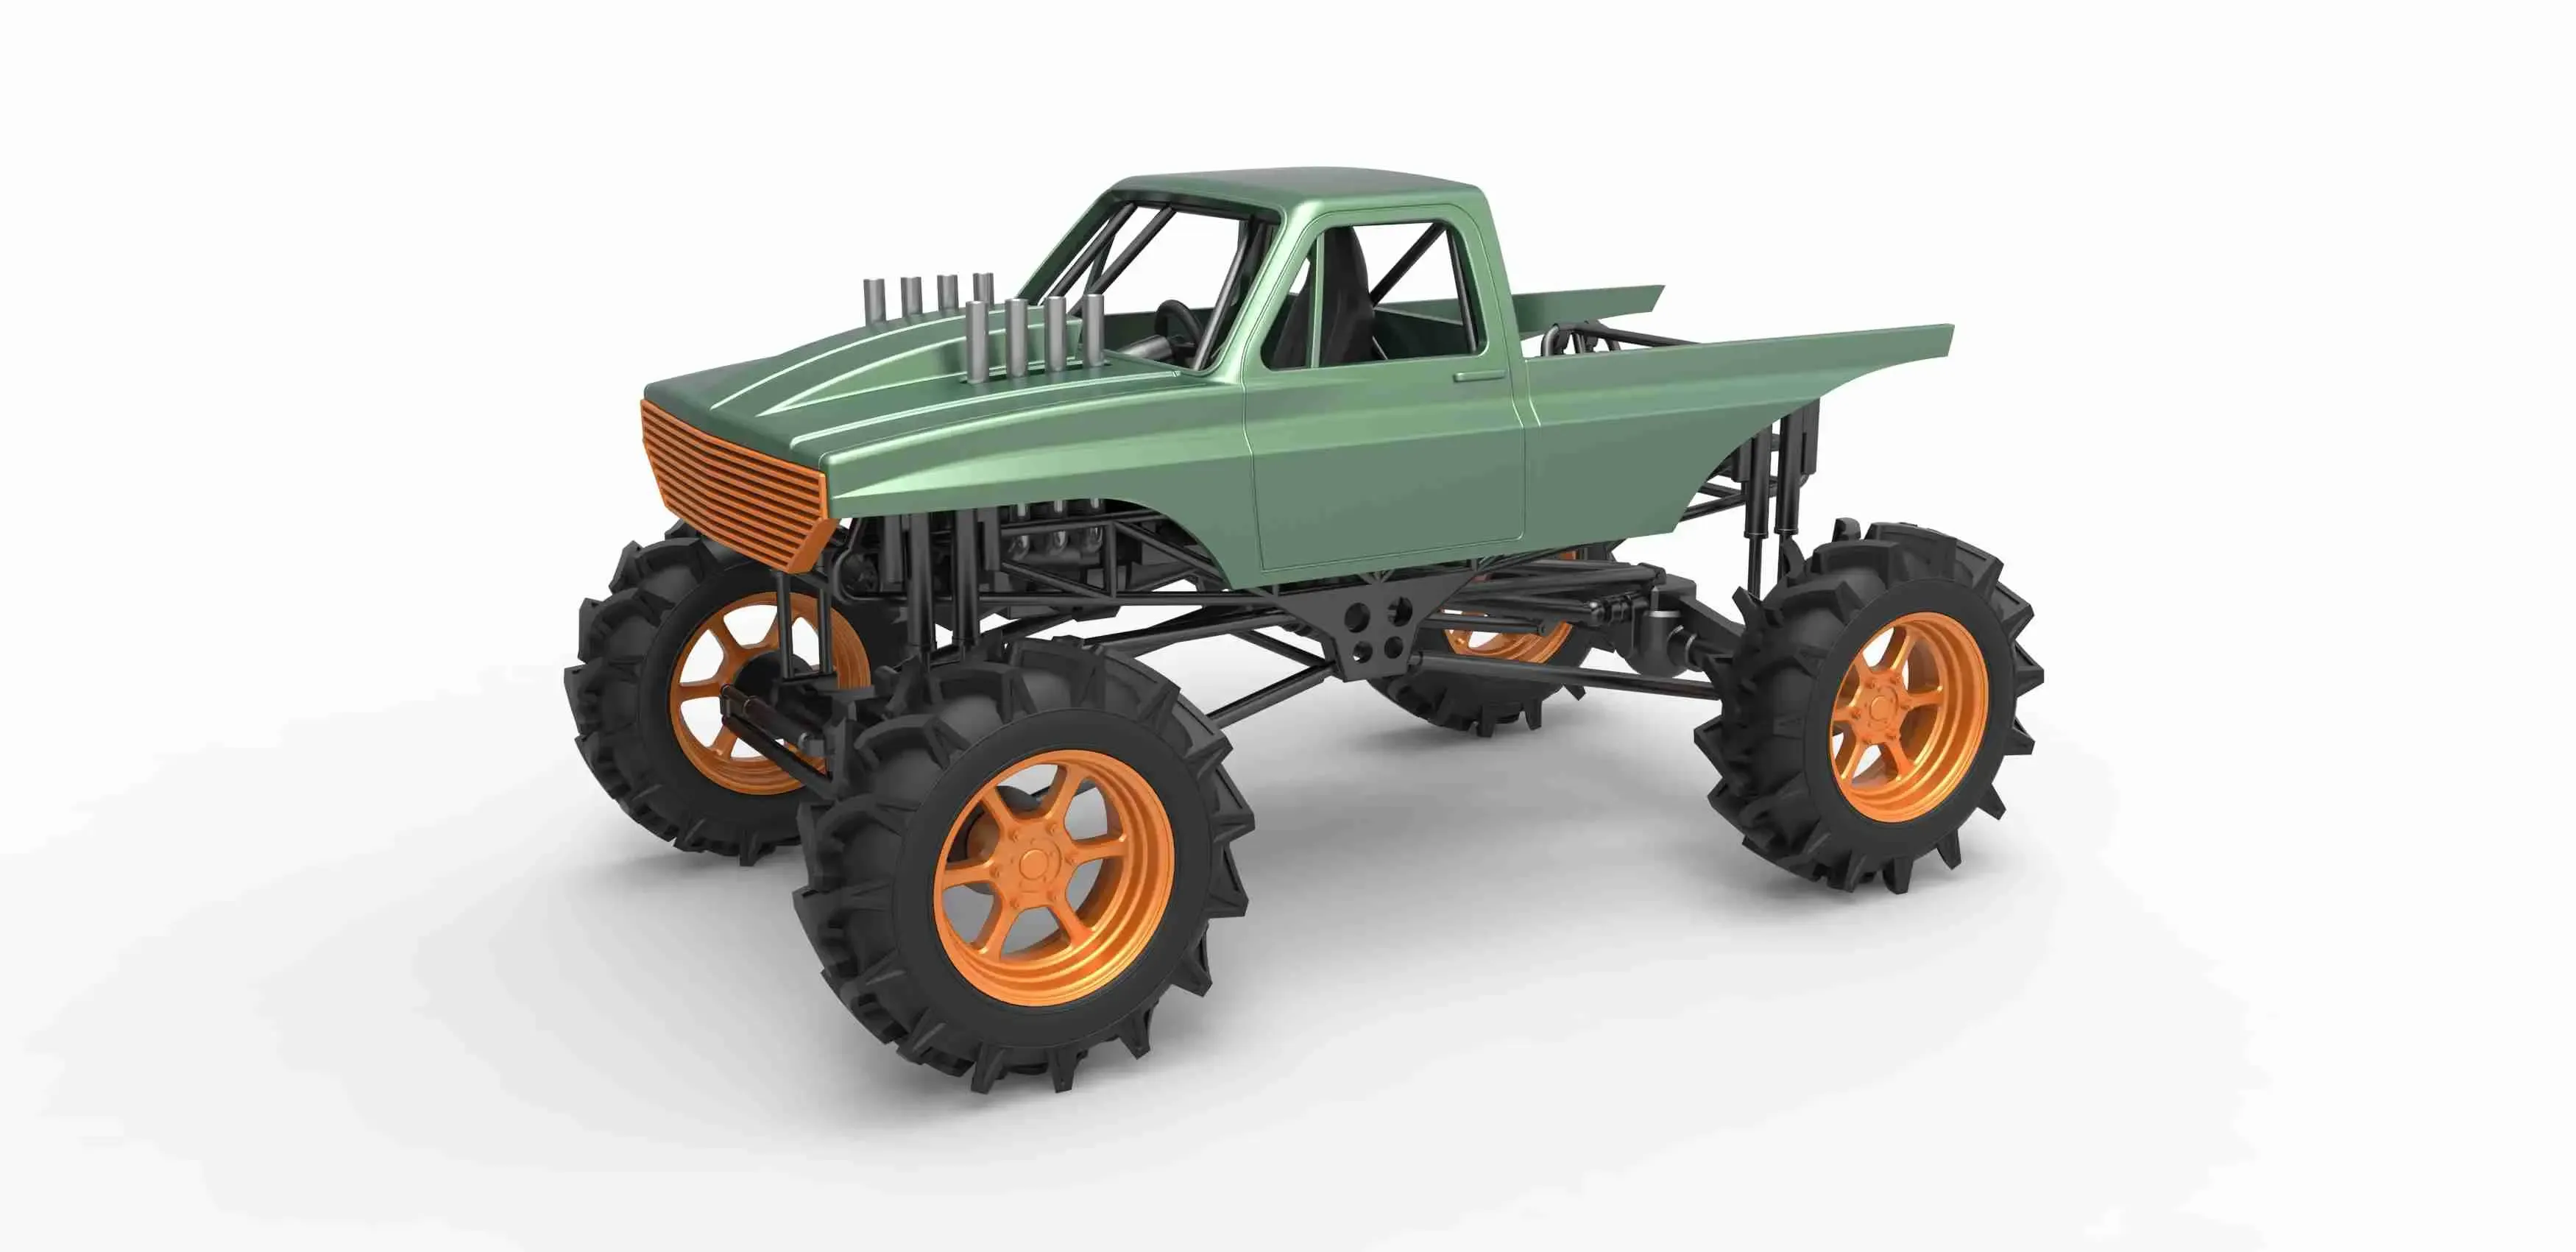 Mud truck Version 2 Scale 1:25